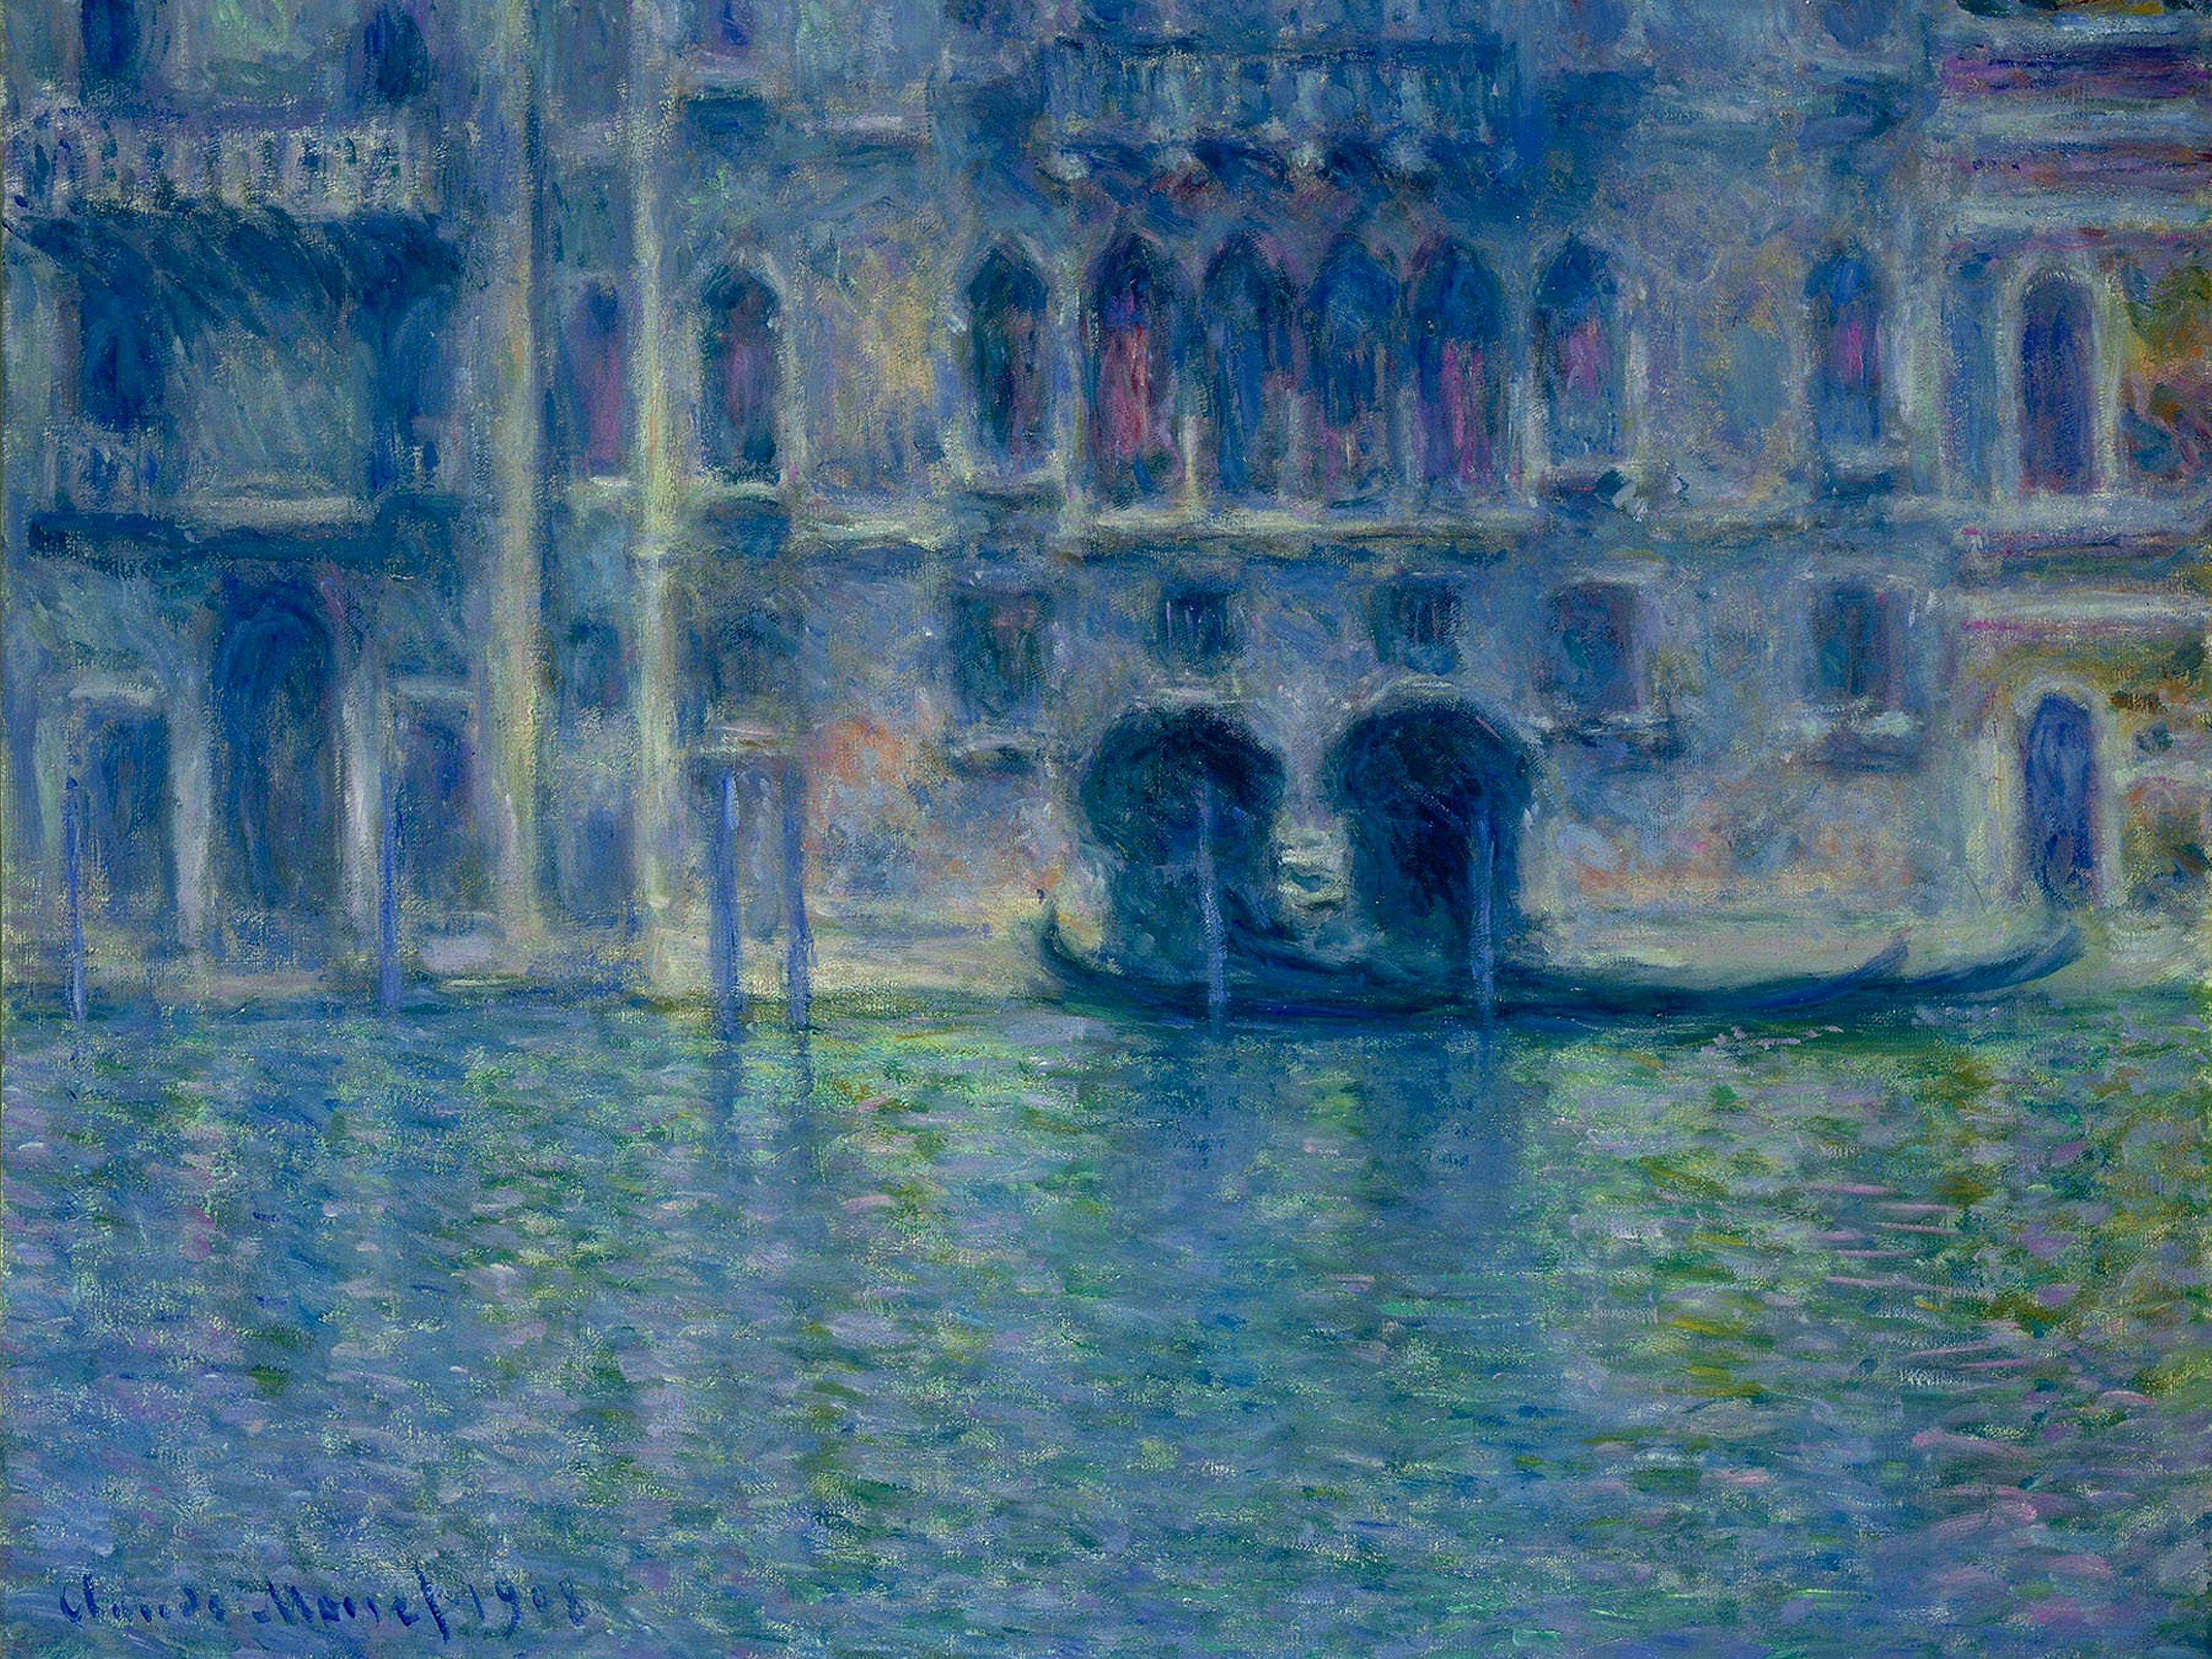 Palazzo da Mula, Venice by Claude Monet - 1908 - 61.4 x 80.5 cm National Gallery of Art